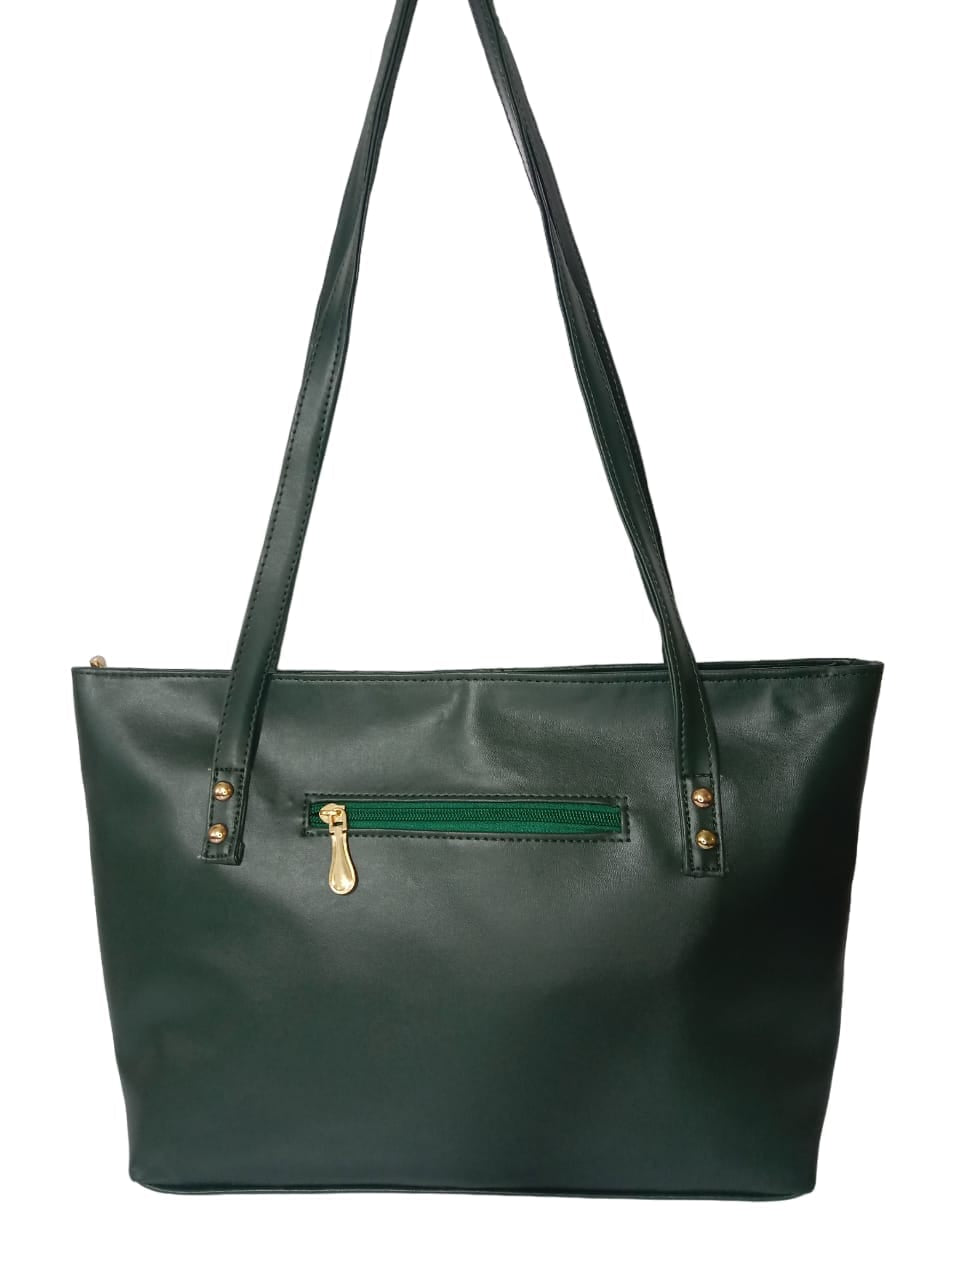 Cube collection, Elegant Women's Handbag - Versatile Design, and Spacious Interior